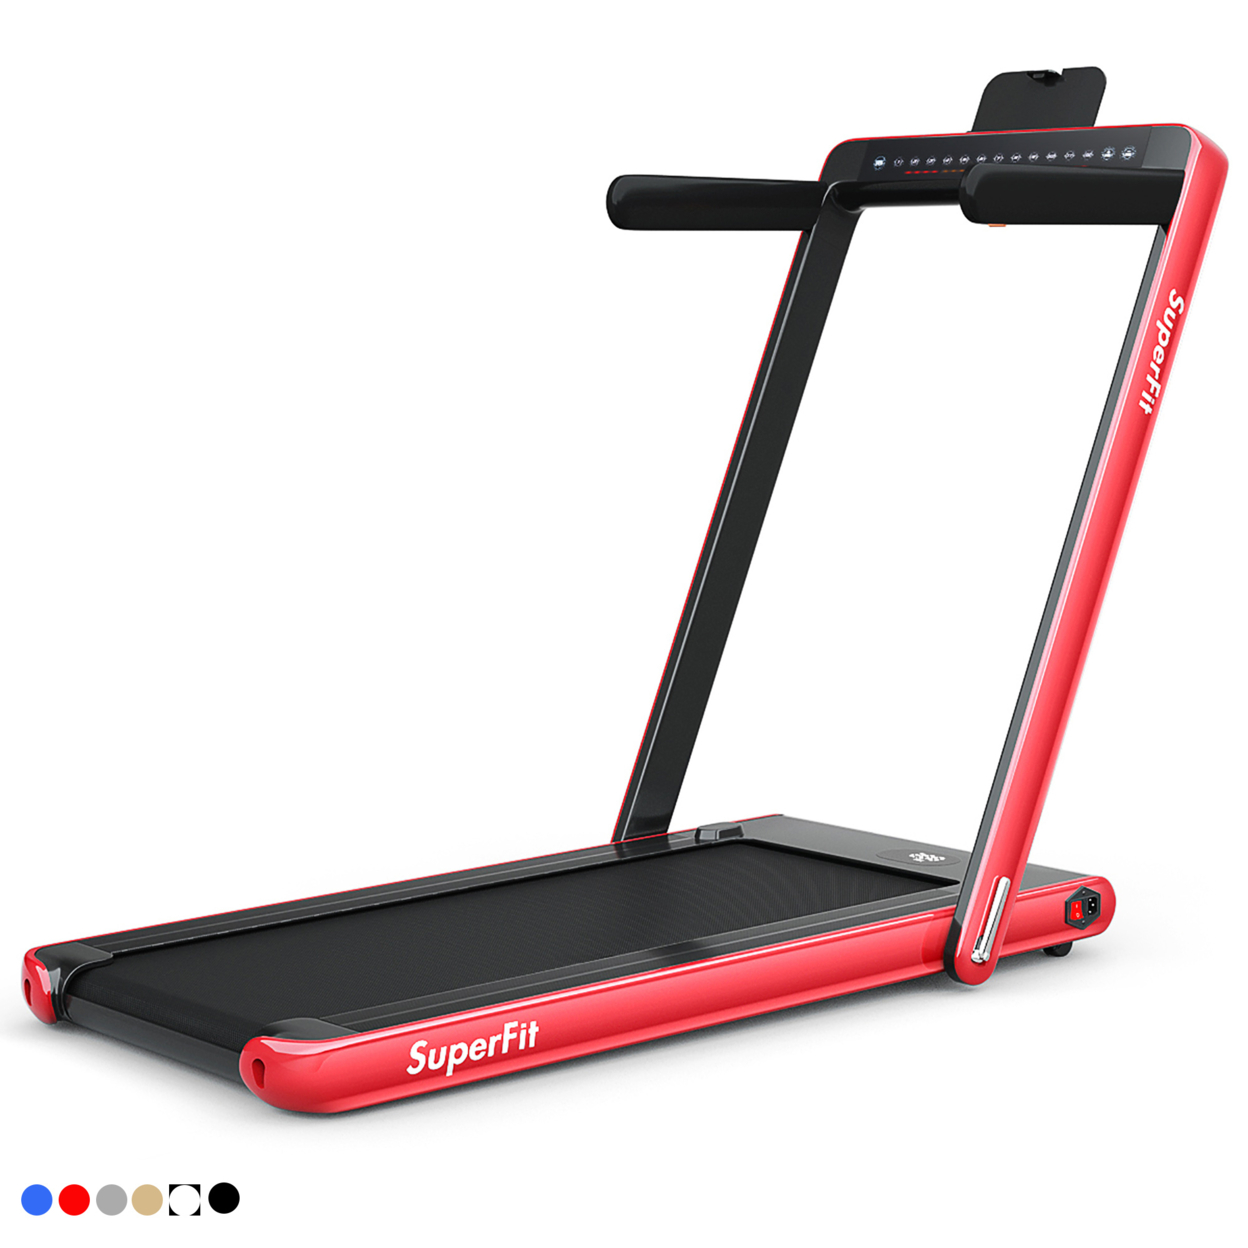 2 In 1 Folding Treadmill 2.25HP Running Machine W/ Dual Display - Red